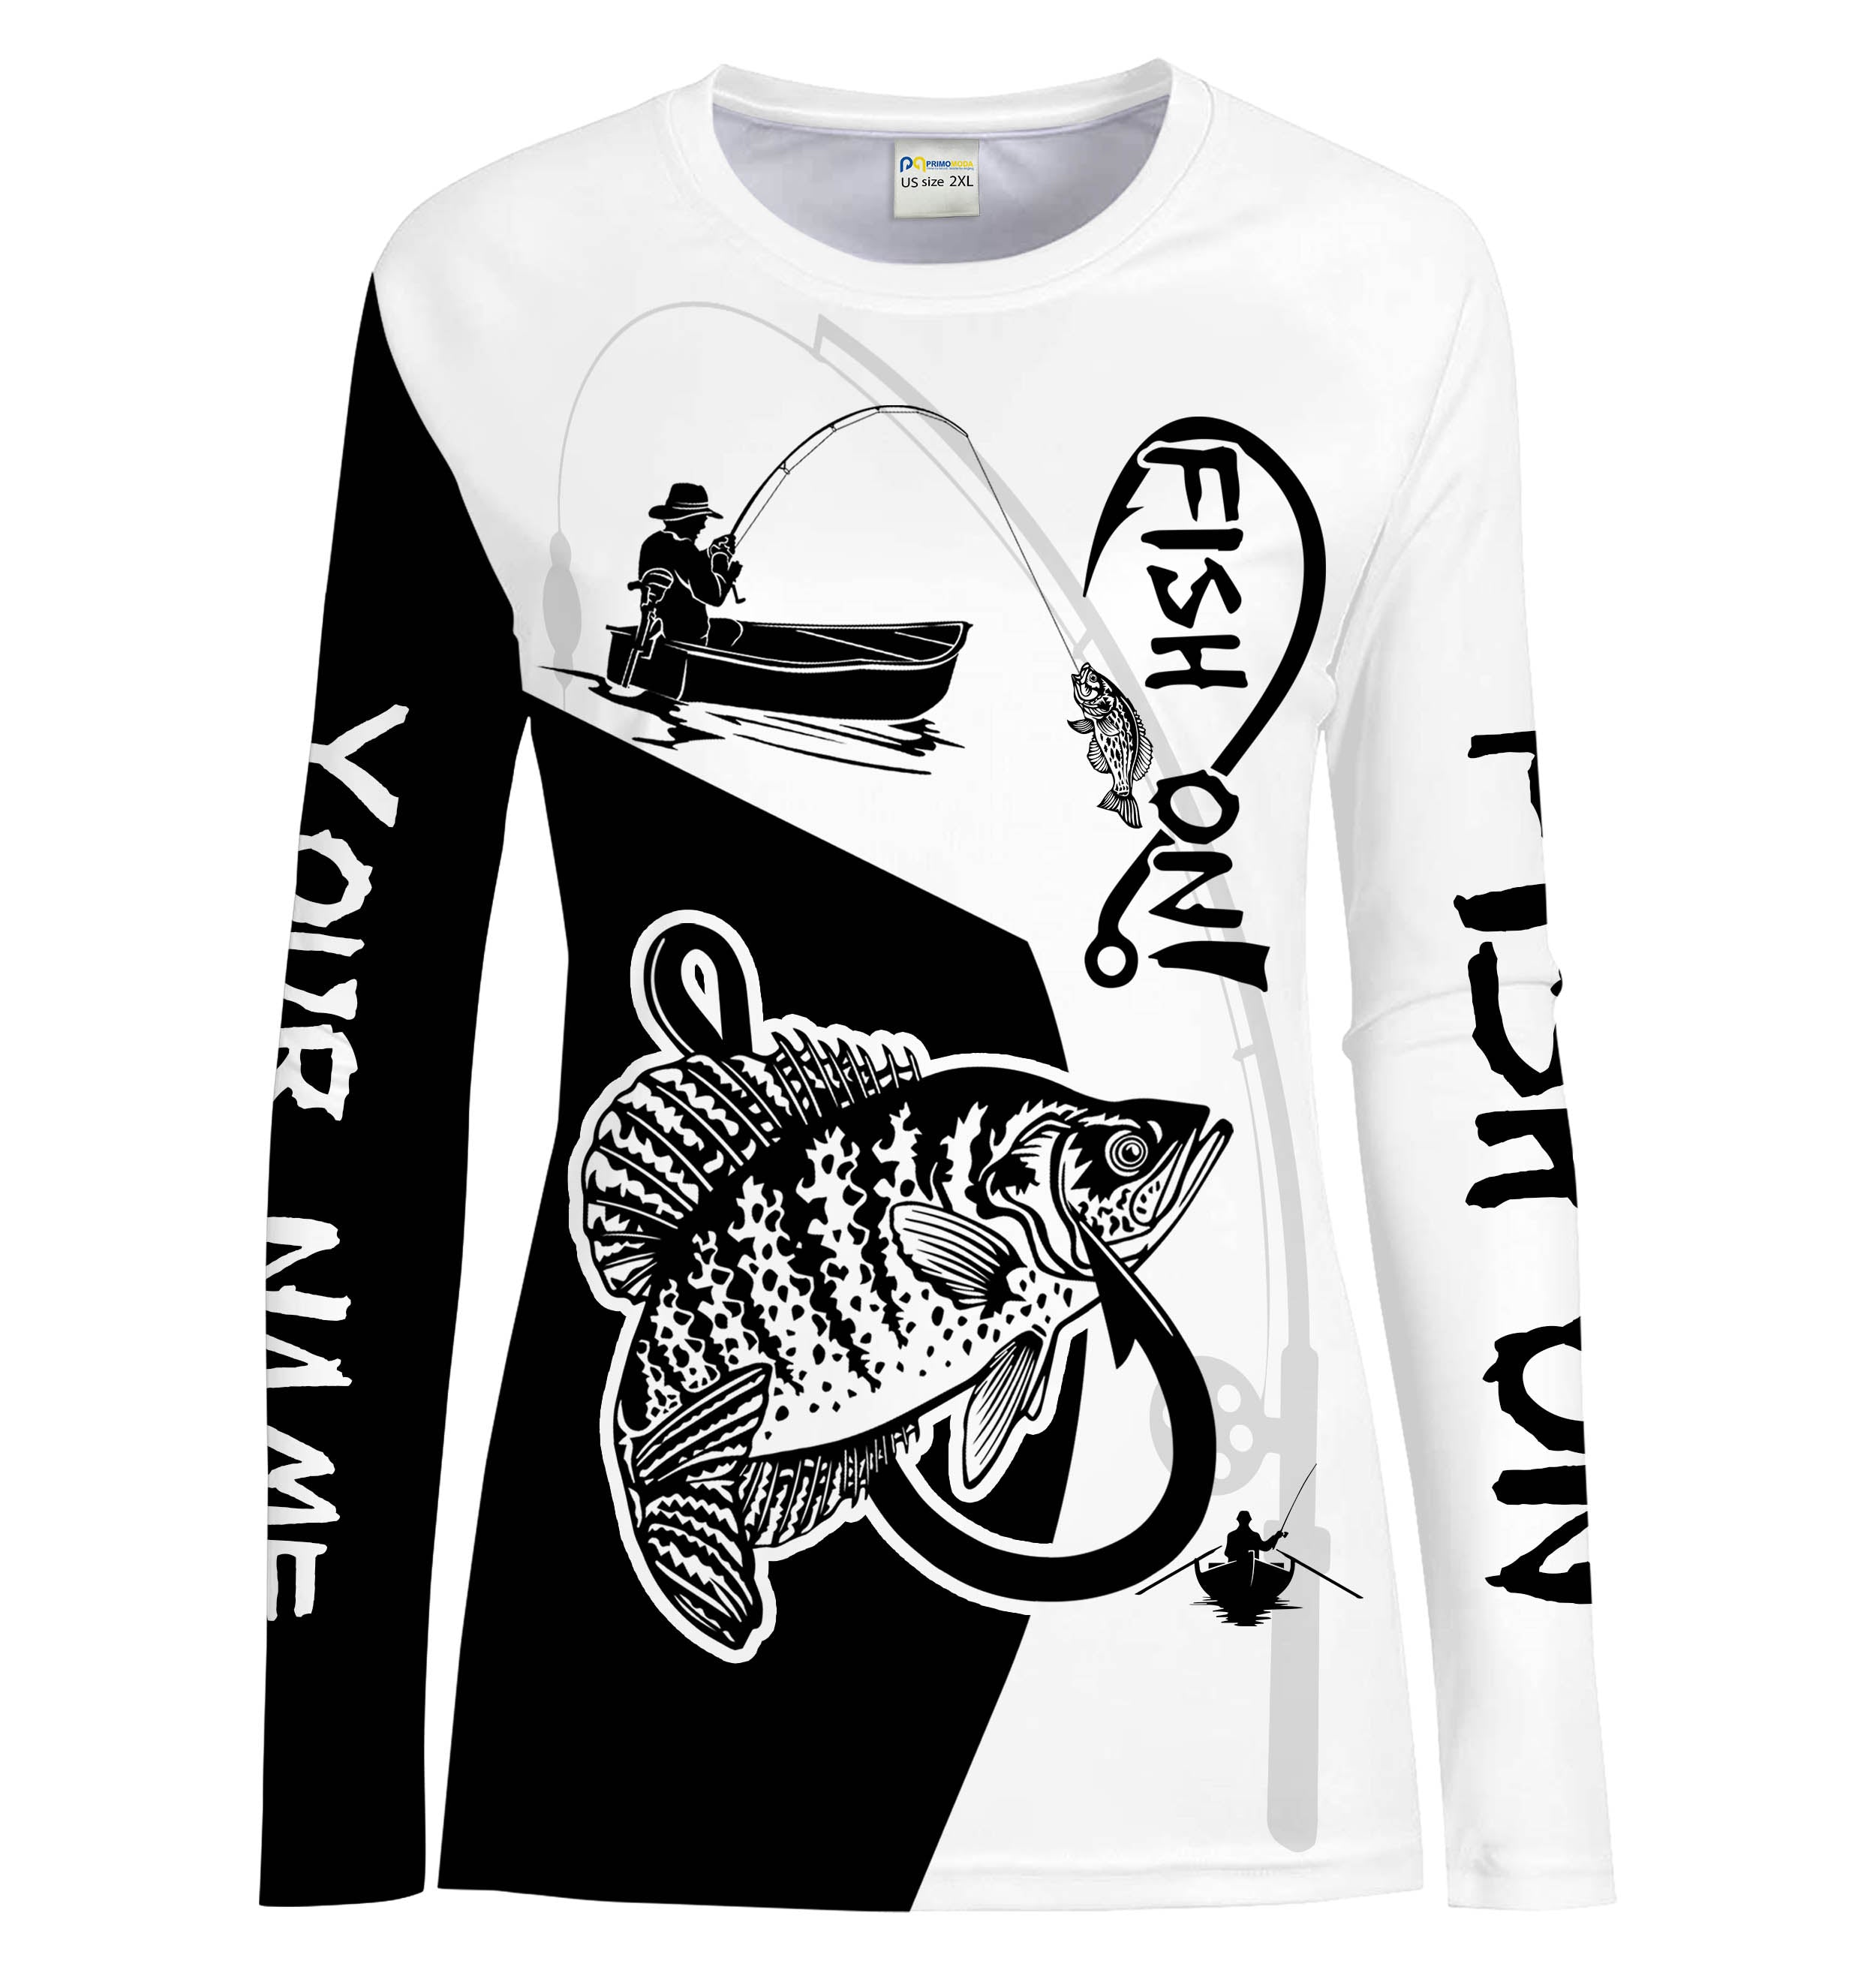 Crappie Fish On tournament fishing apparel UV protection UPF 30+